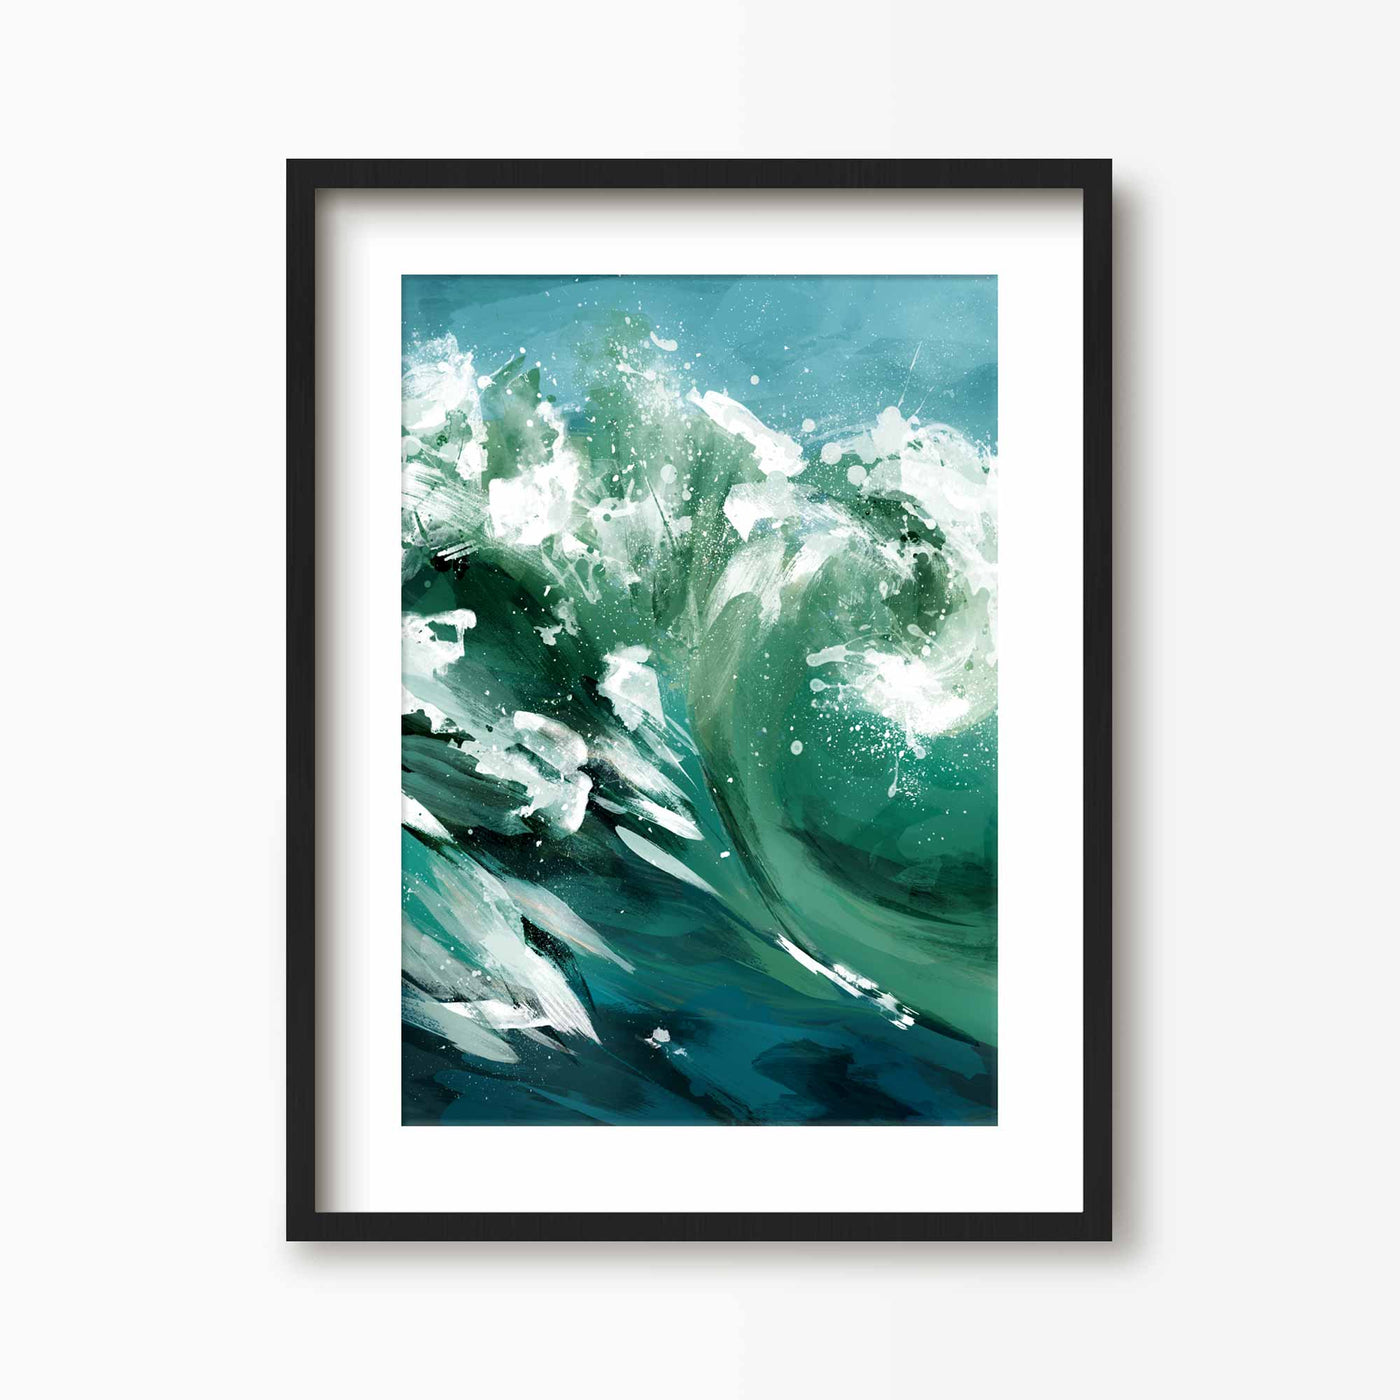 Green Lili 30x40cm (12x16") / Black Frame + Mount Ride the Wave Ocean Art Print